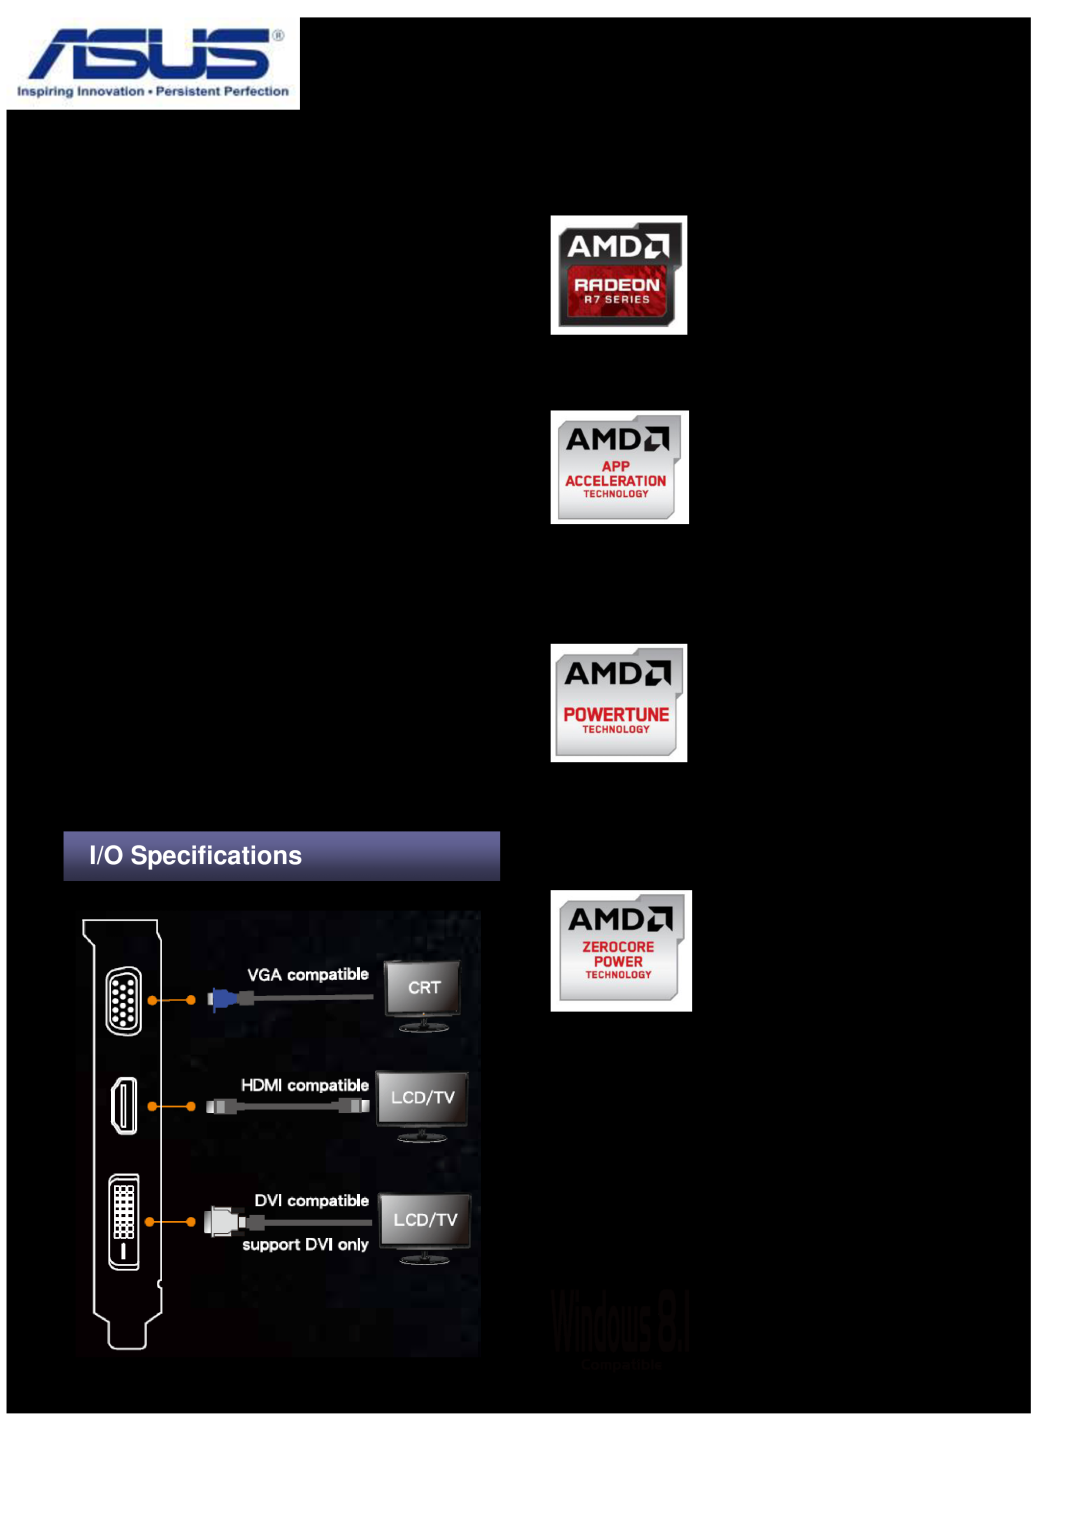 Asus R72402GD3L  Gigantic 2GB DDR3 Memory,  AMD Radeon R7,  Low Profile Design,  AMD App Acceleration, technology 